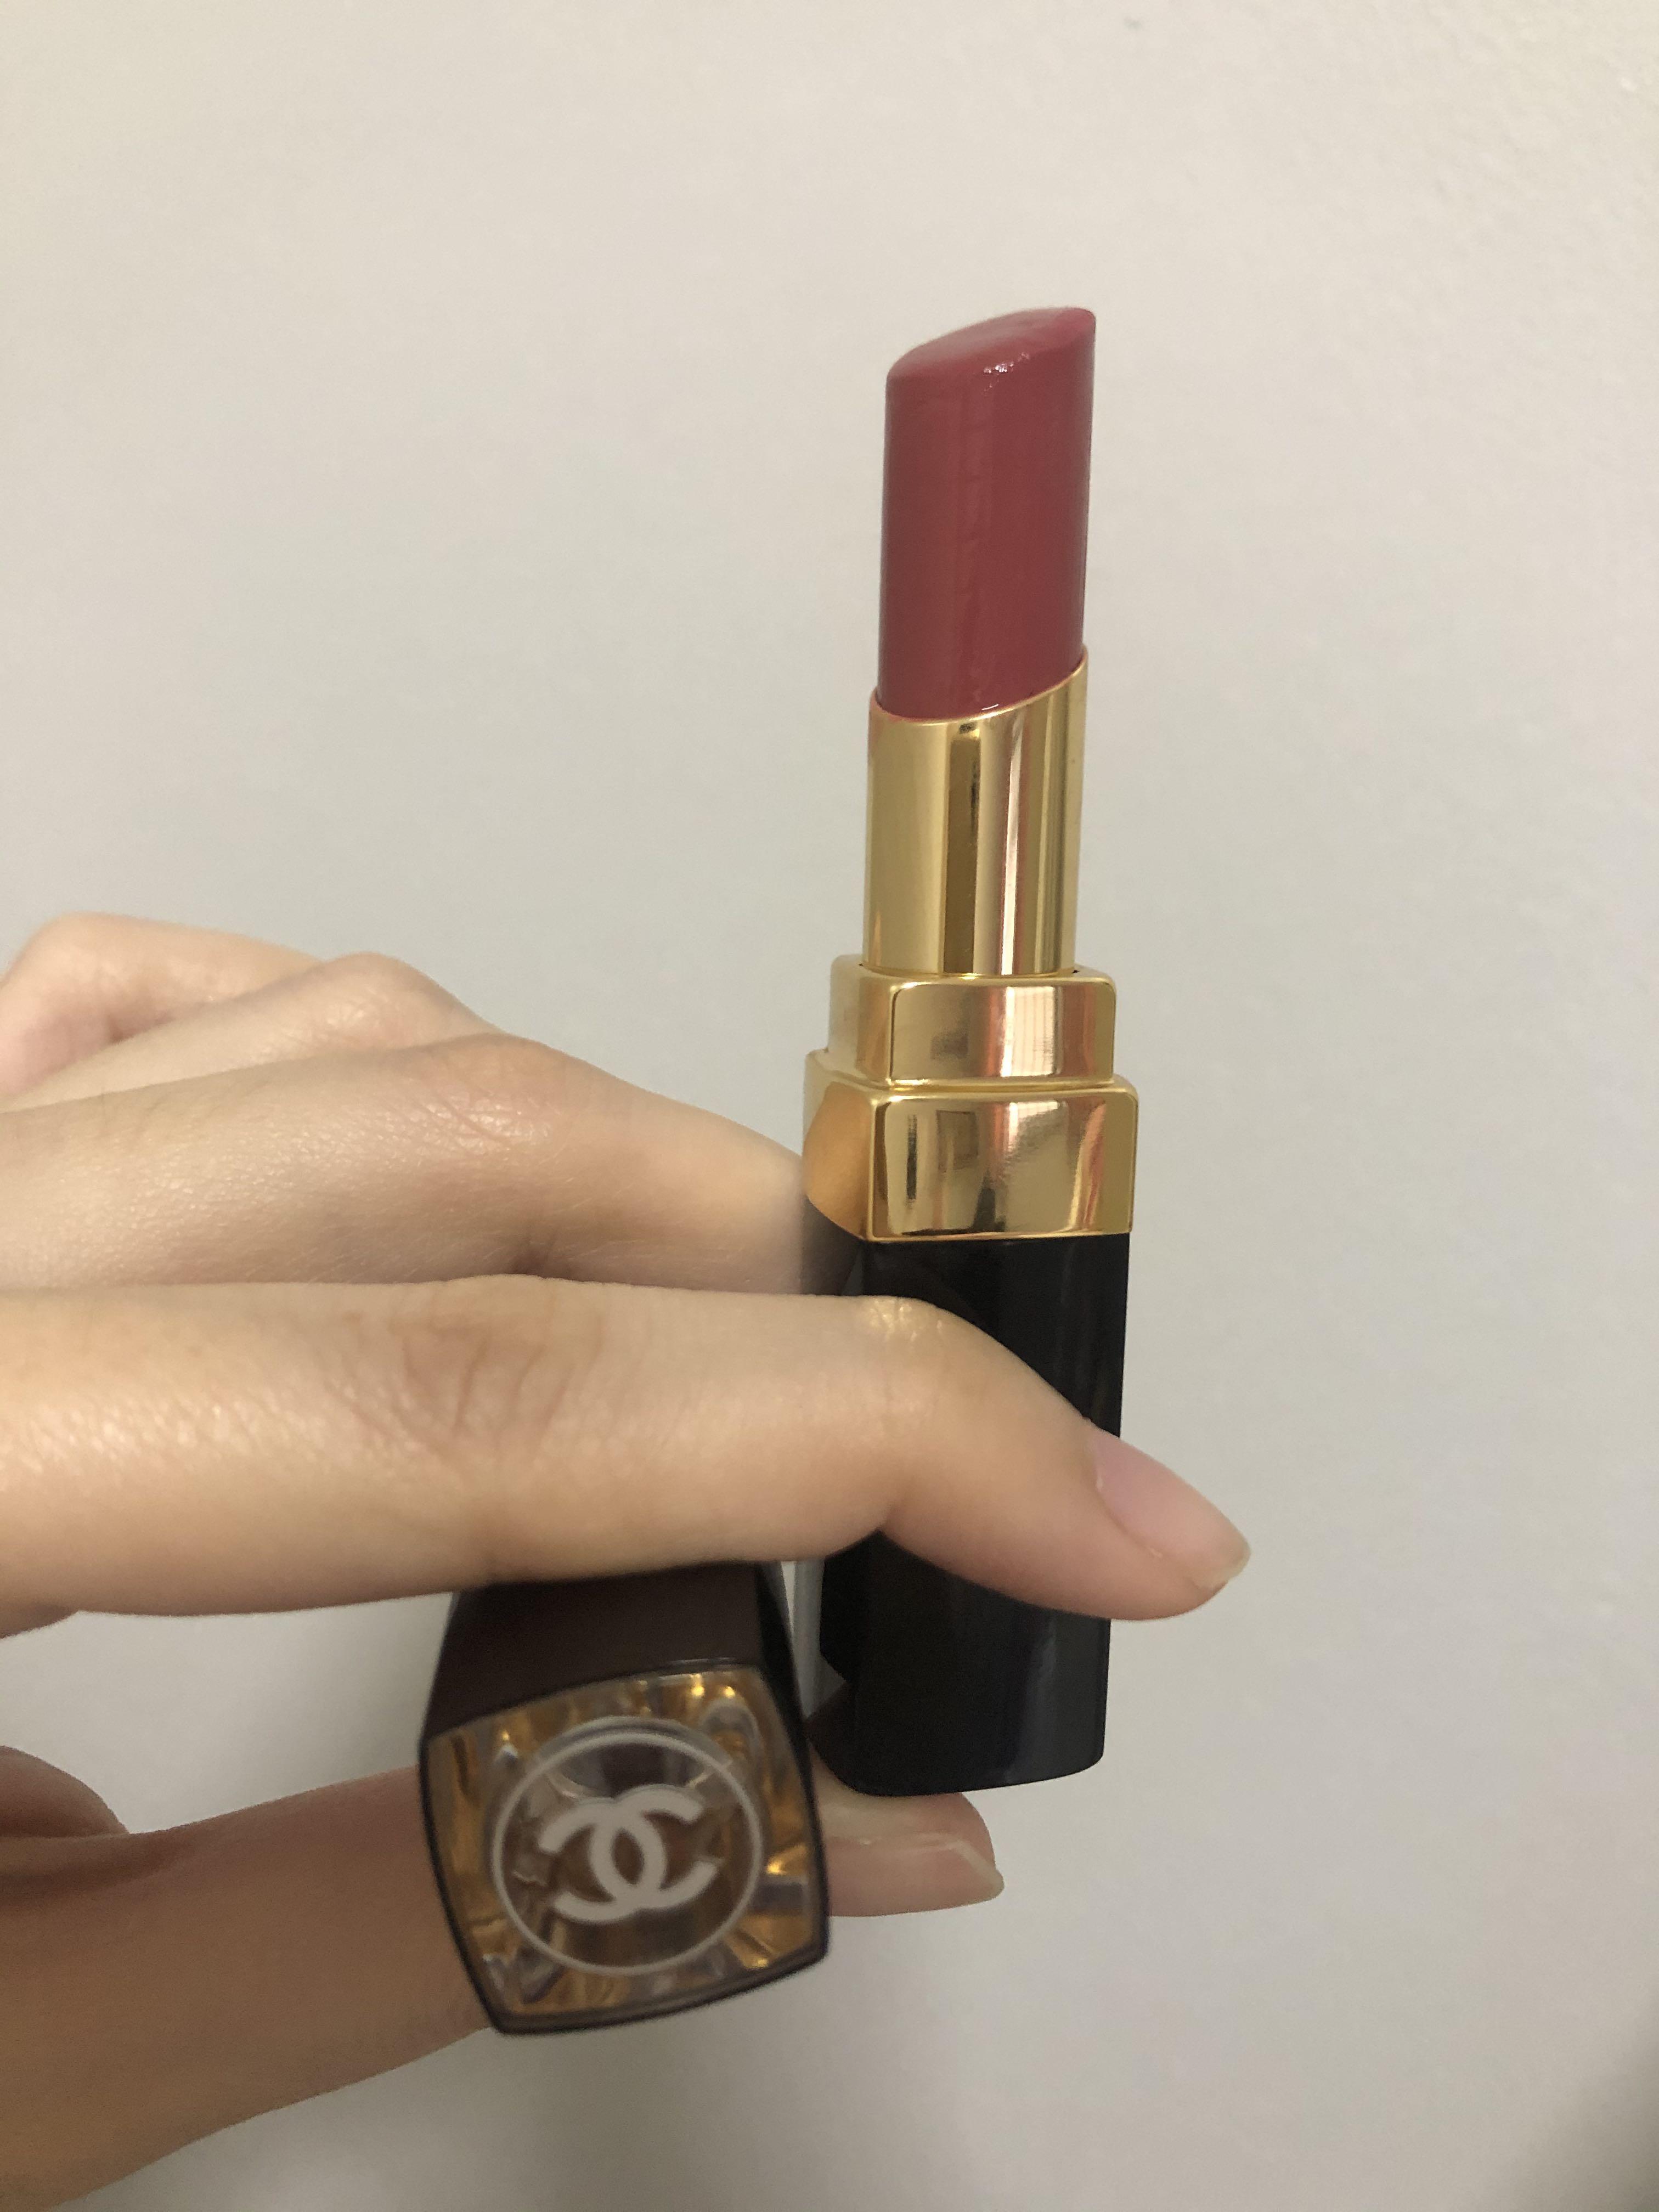 Chanel Rouge coco flash in Jour *FINAL SALE*, Women's Fashion